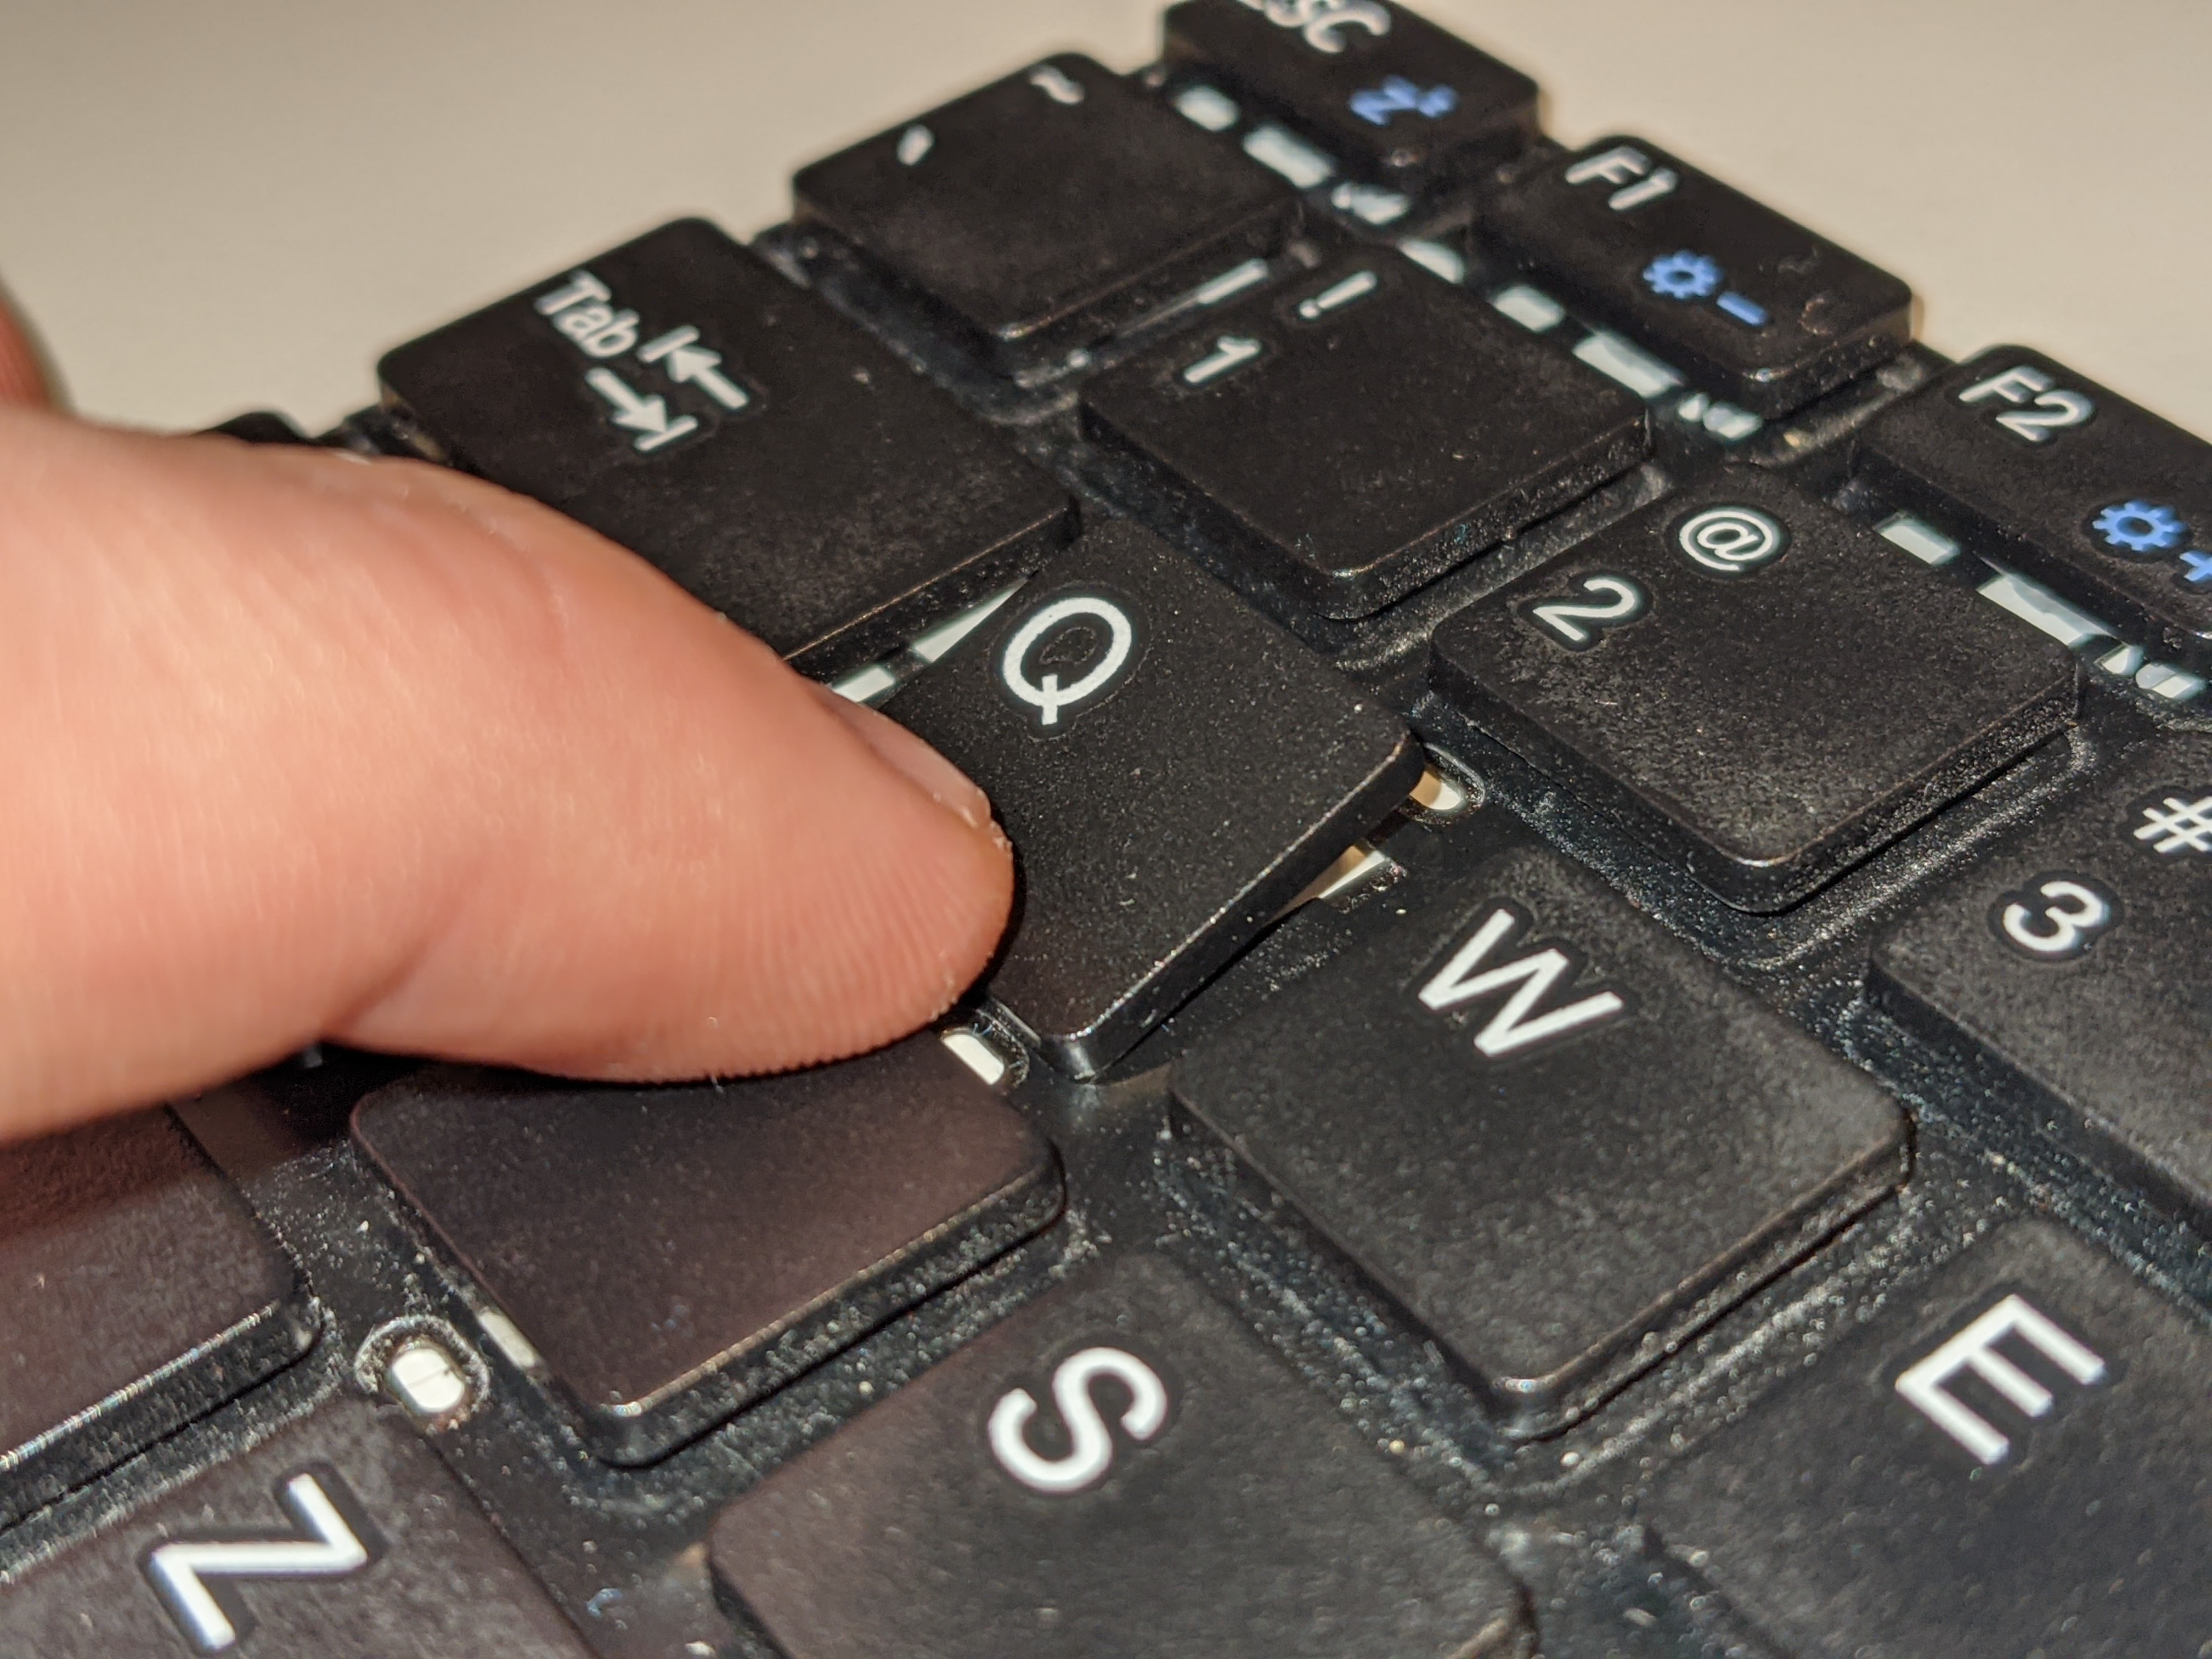 Pinebookpro keyboard key-half-removed.jpg